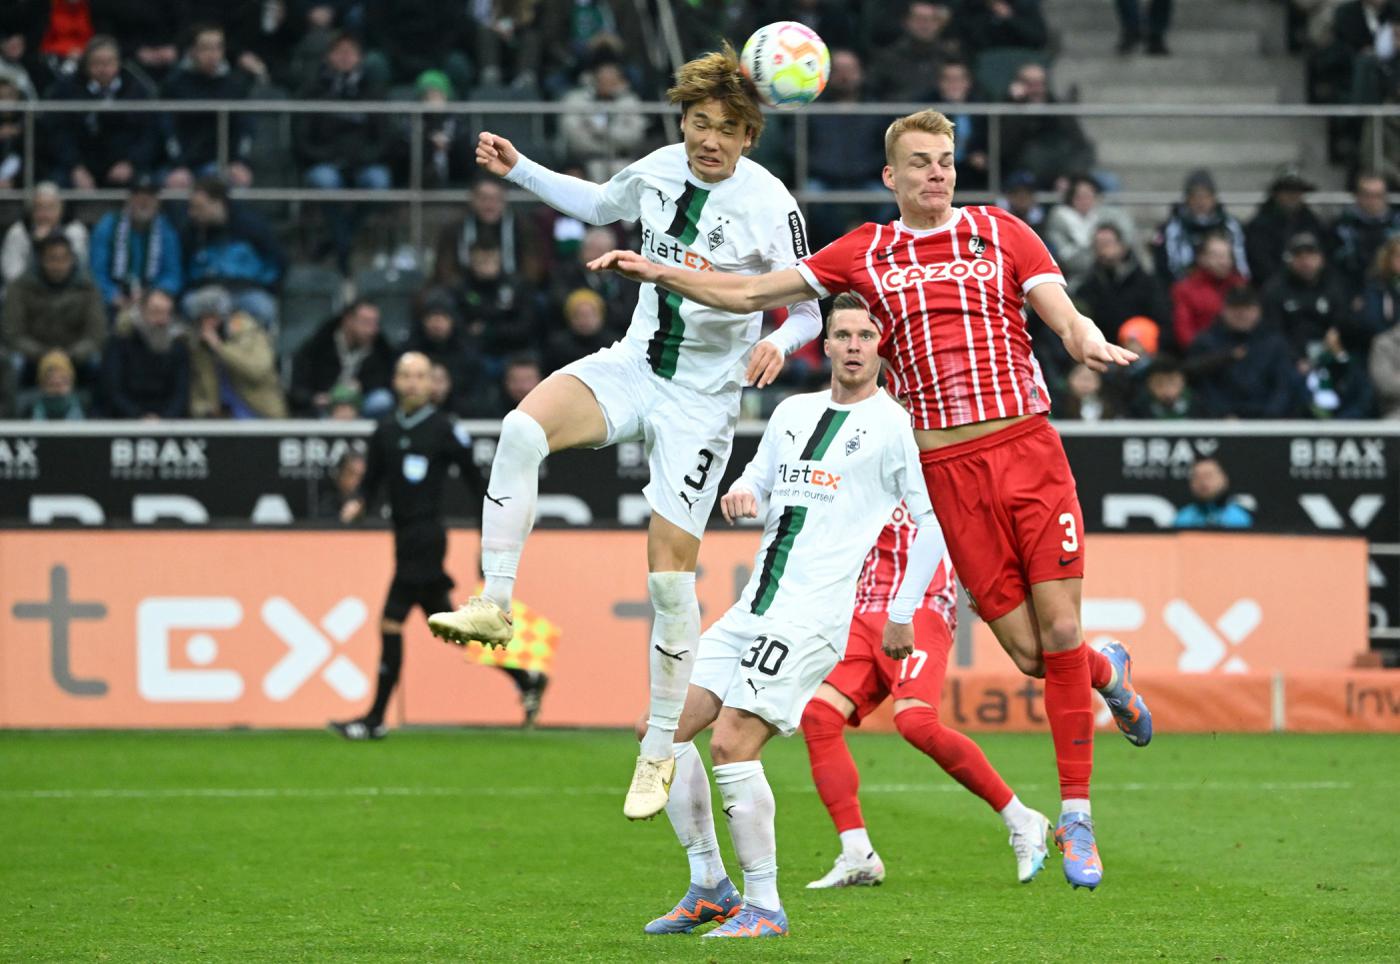 Borussia M vs Freiburg - 0-0. German Championship, round 23. Match review, statistics.